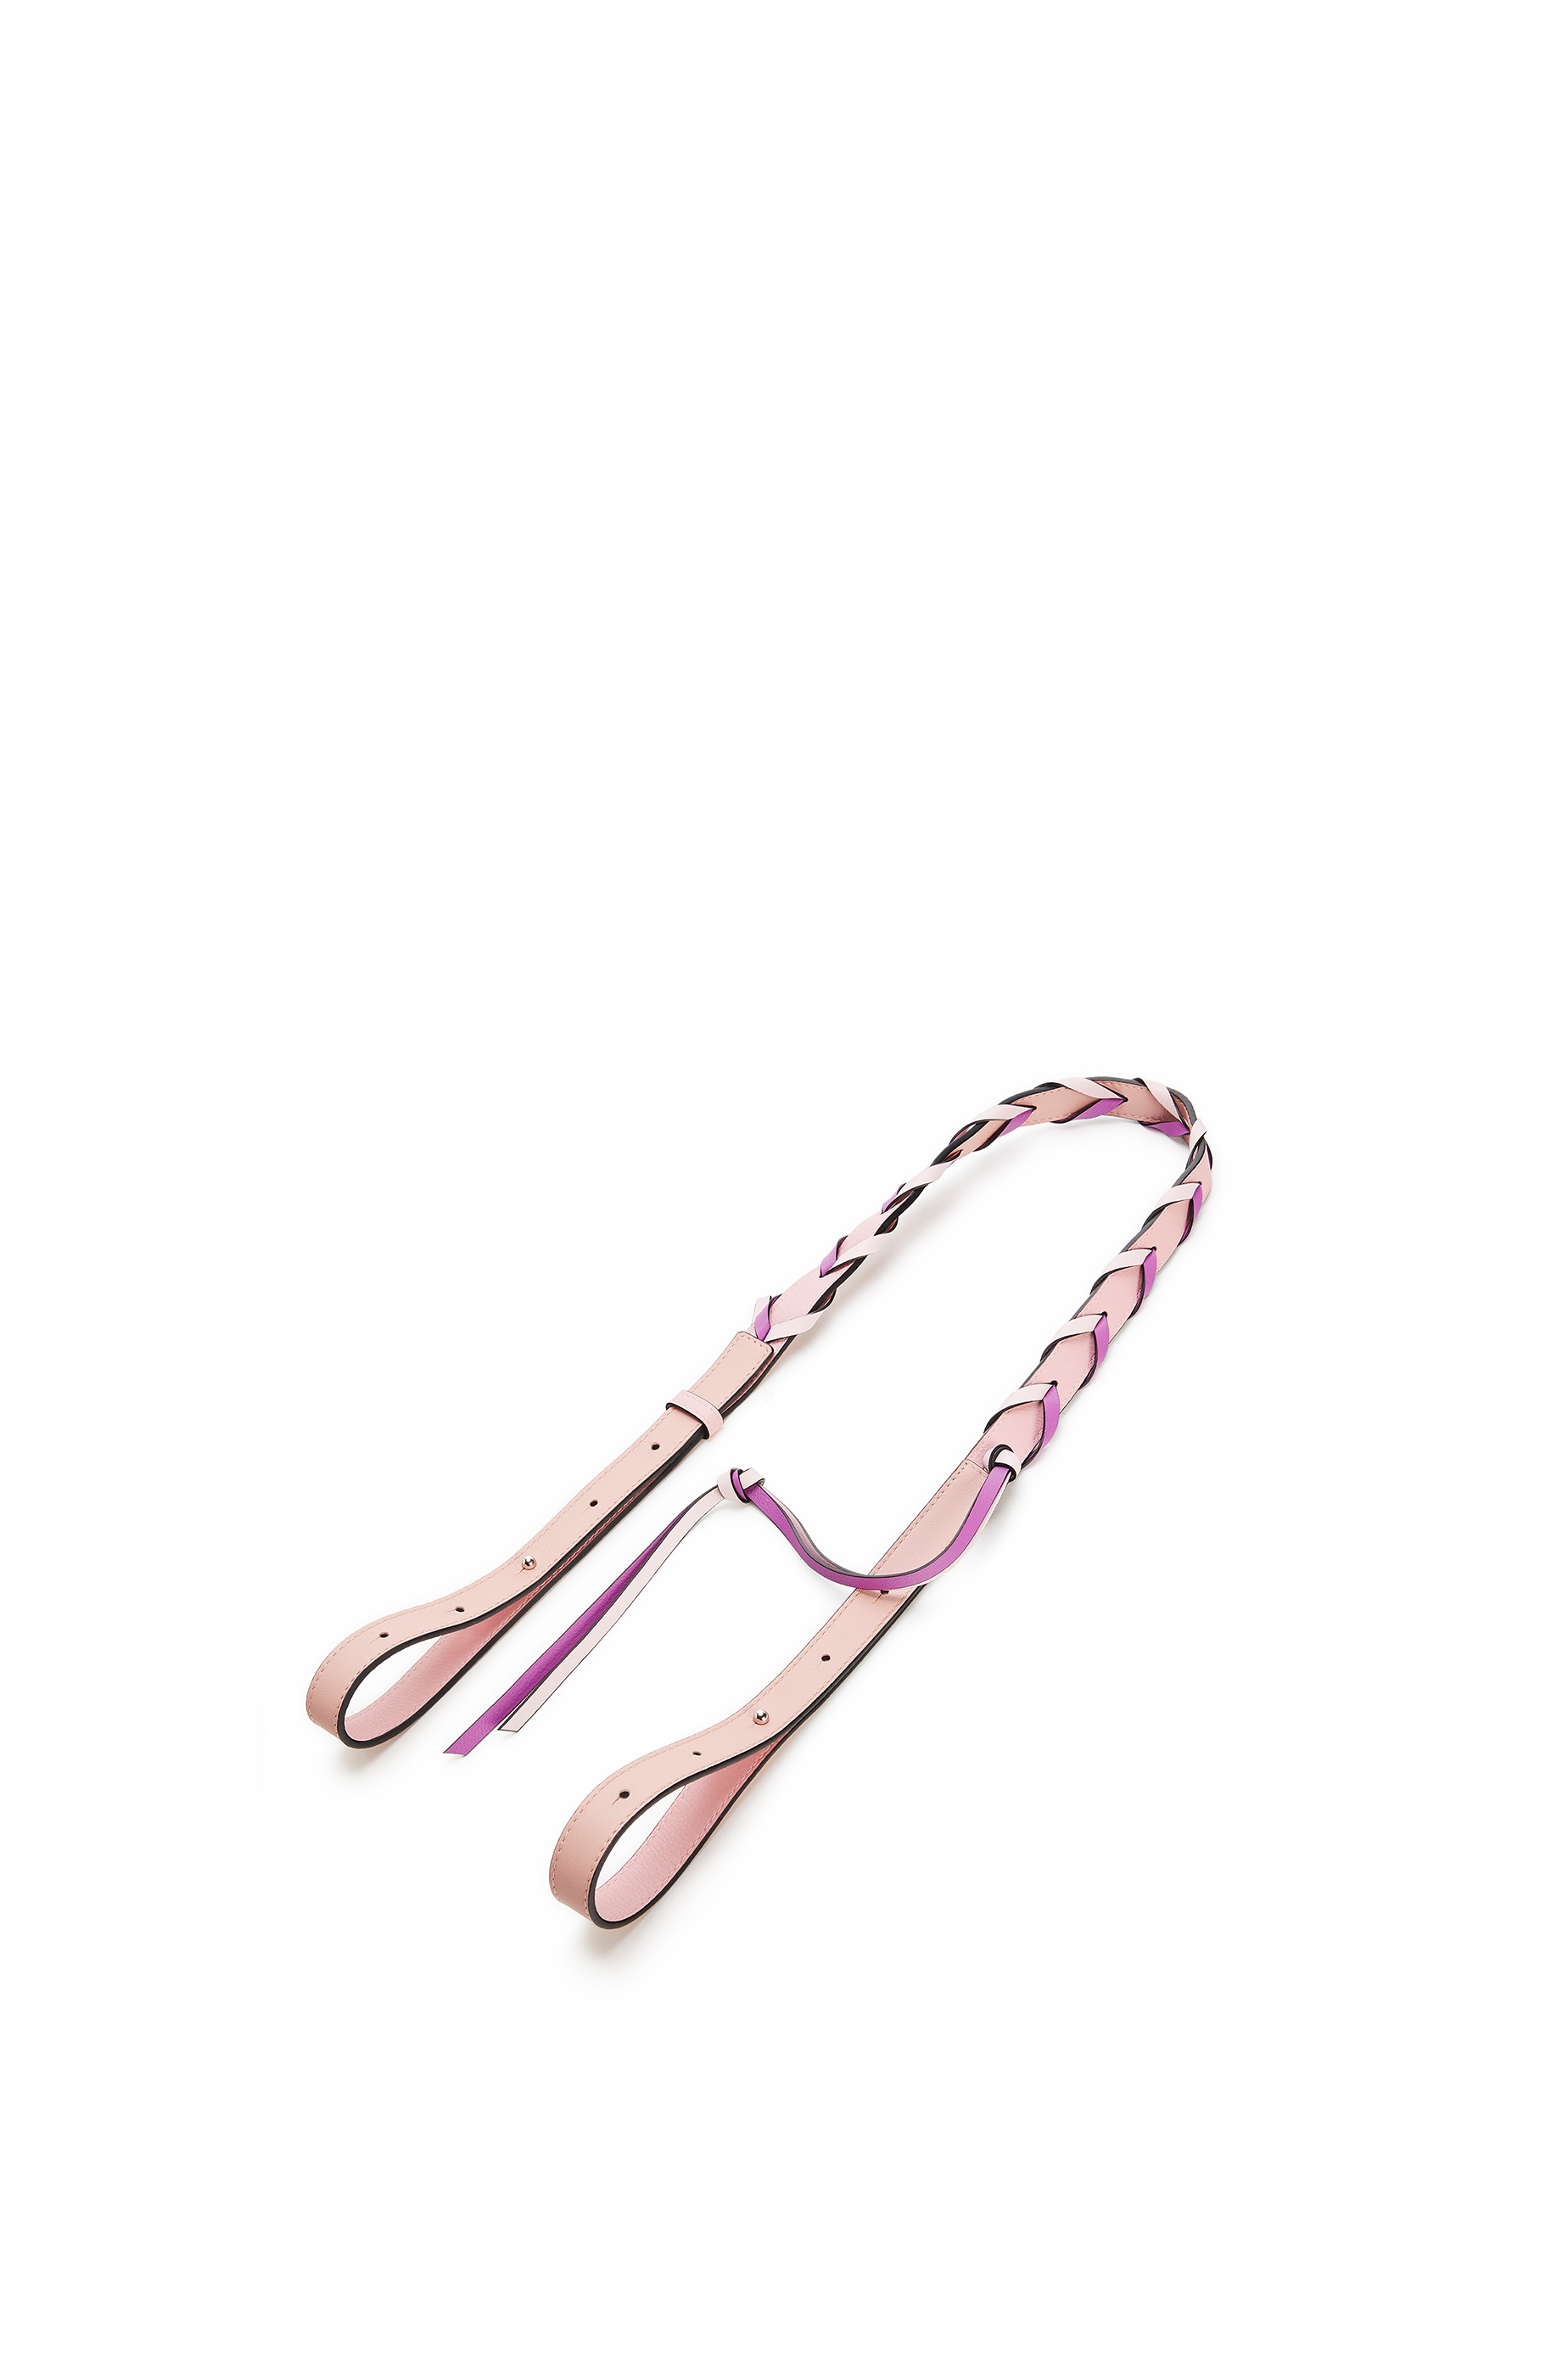 Luxury bag straps for women